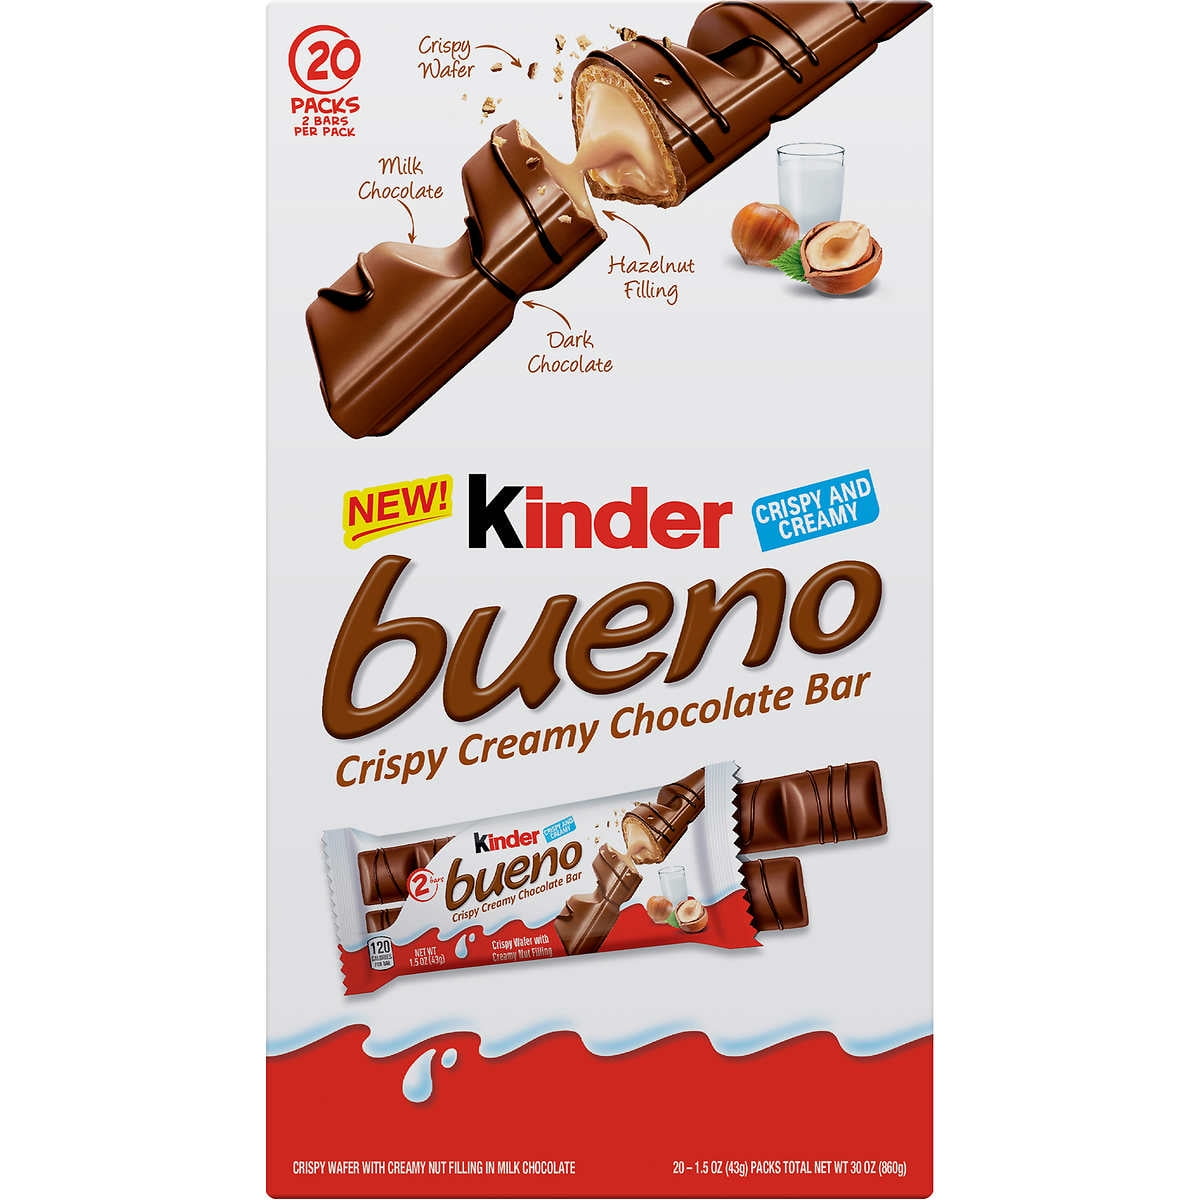 Ferror Kinder Bueno White Milk Chocolate Hazelnut Snack Twin Bars Pack 30 x  39g